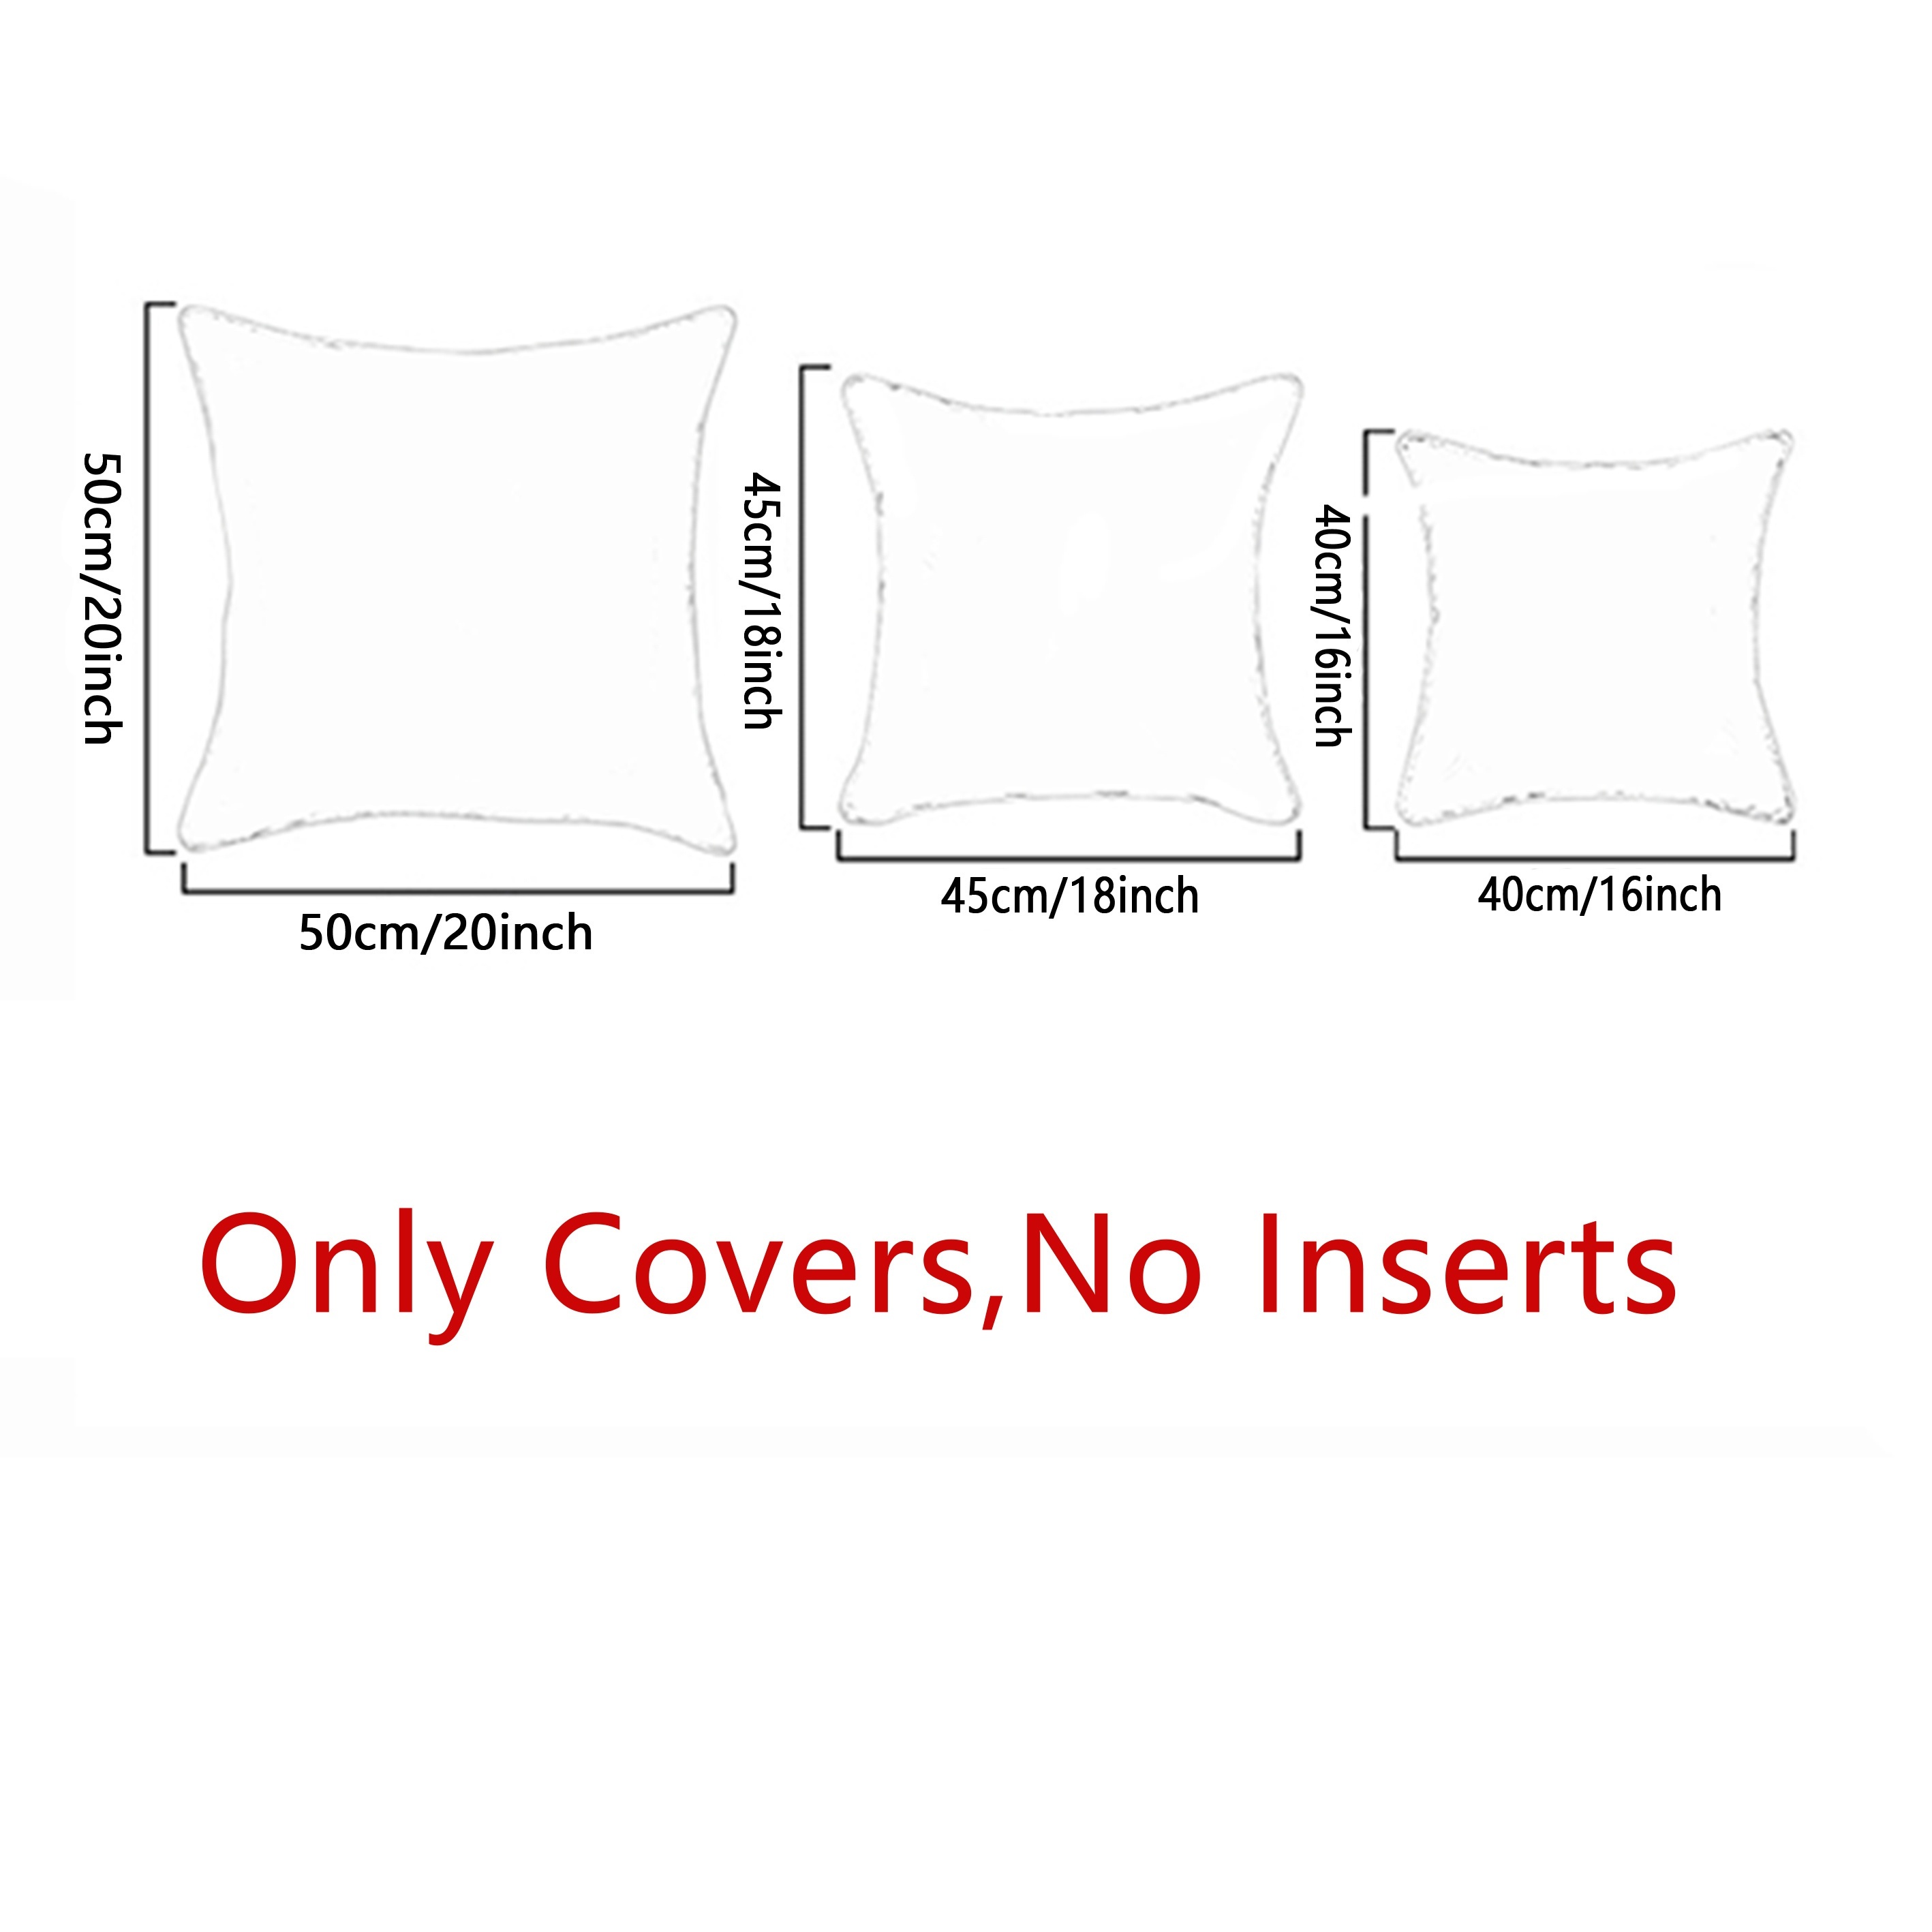 Family Ohana Quote Themed Linen Throw Pillow Cushion Insert..christmas/birthday  Gift. 